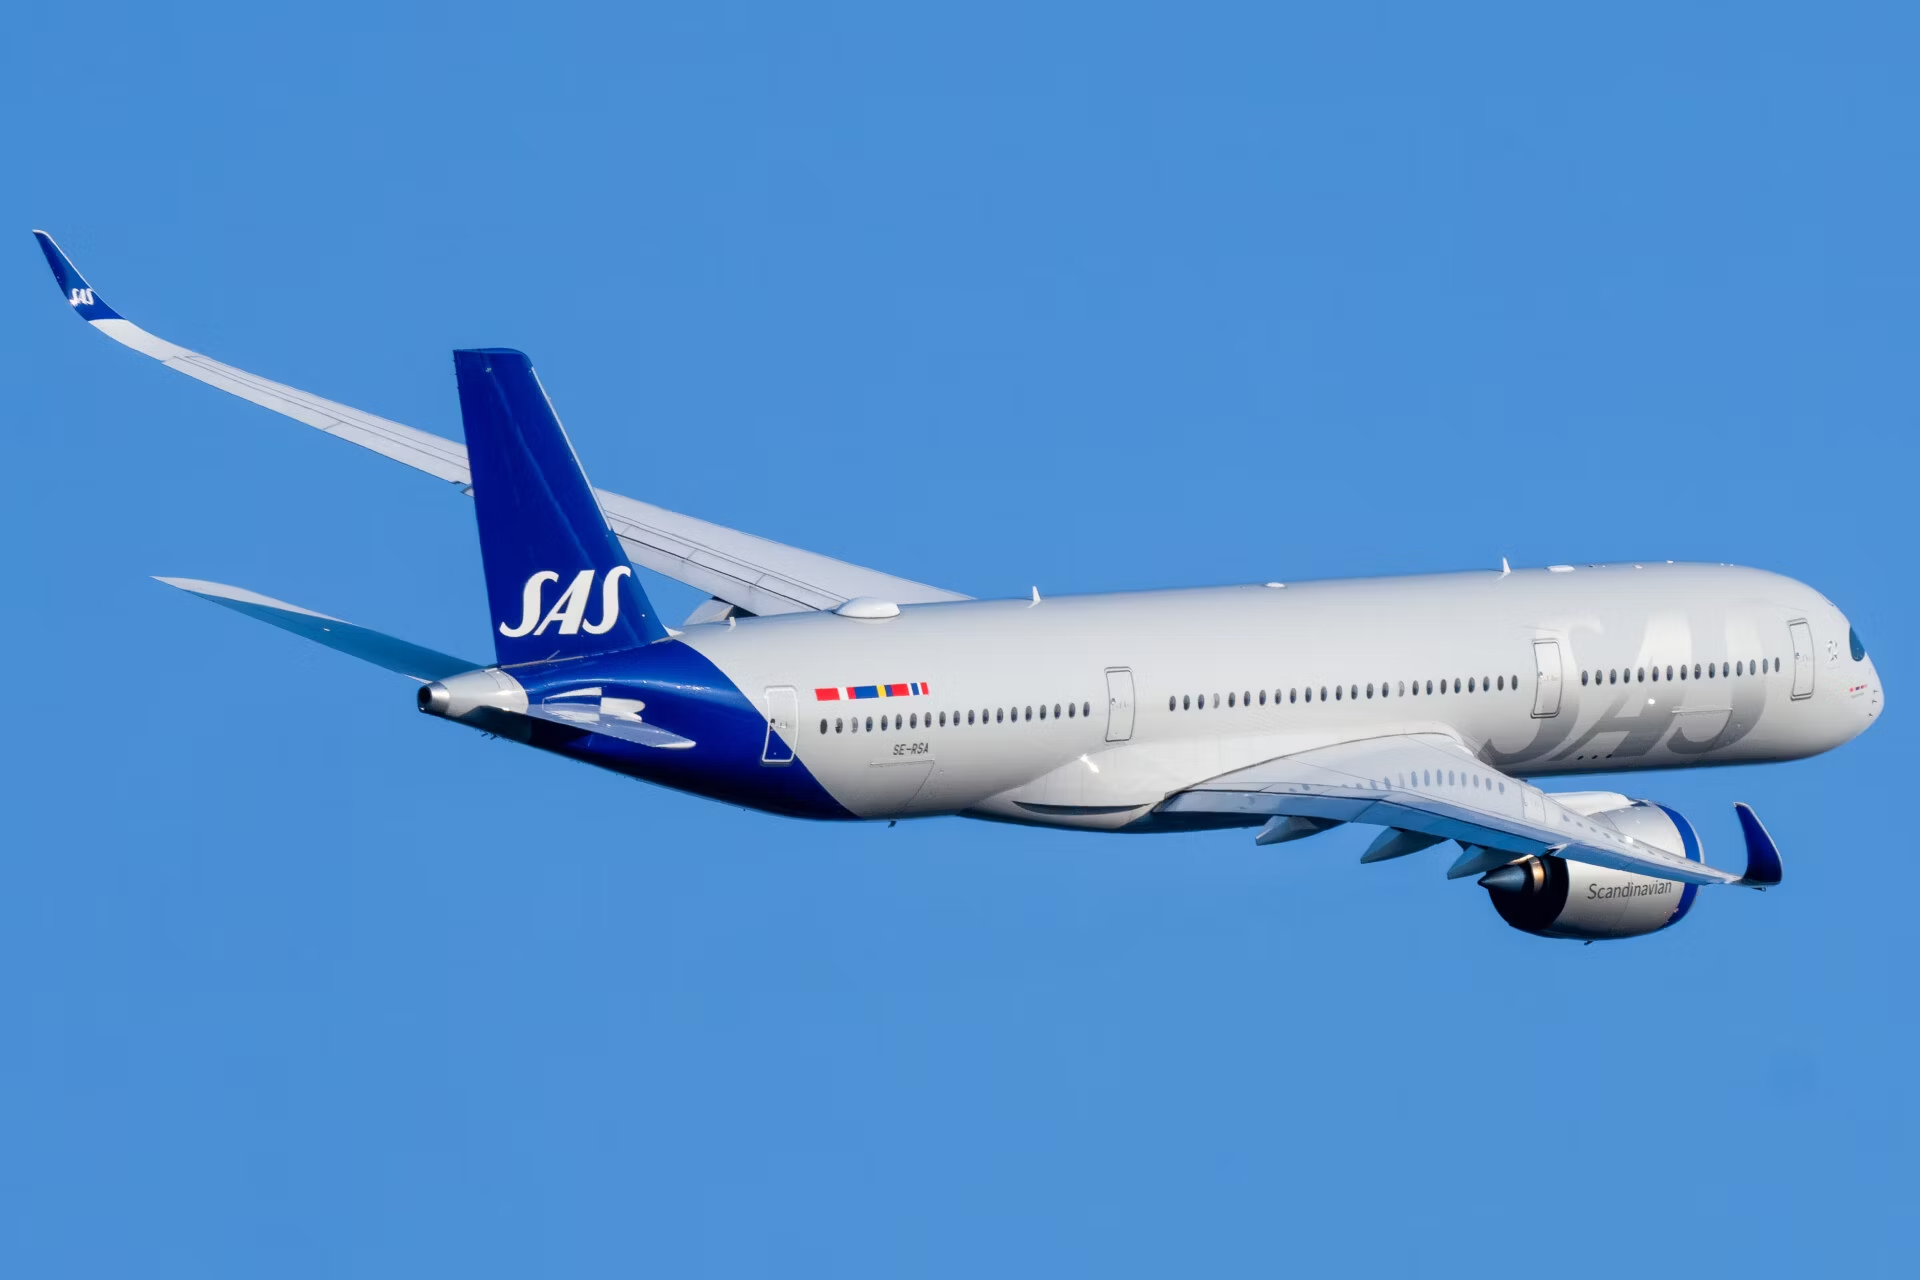 H σκανδιναβική αεροπορική εταιρεία SAS κατέθεσε αίτηση για πτώχευση στις ΗΠΑ – Σε απεργία οι πιλότοι